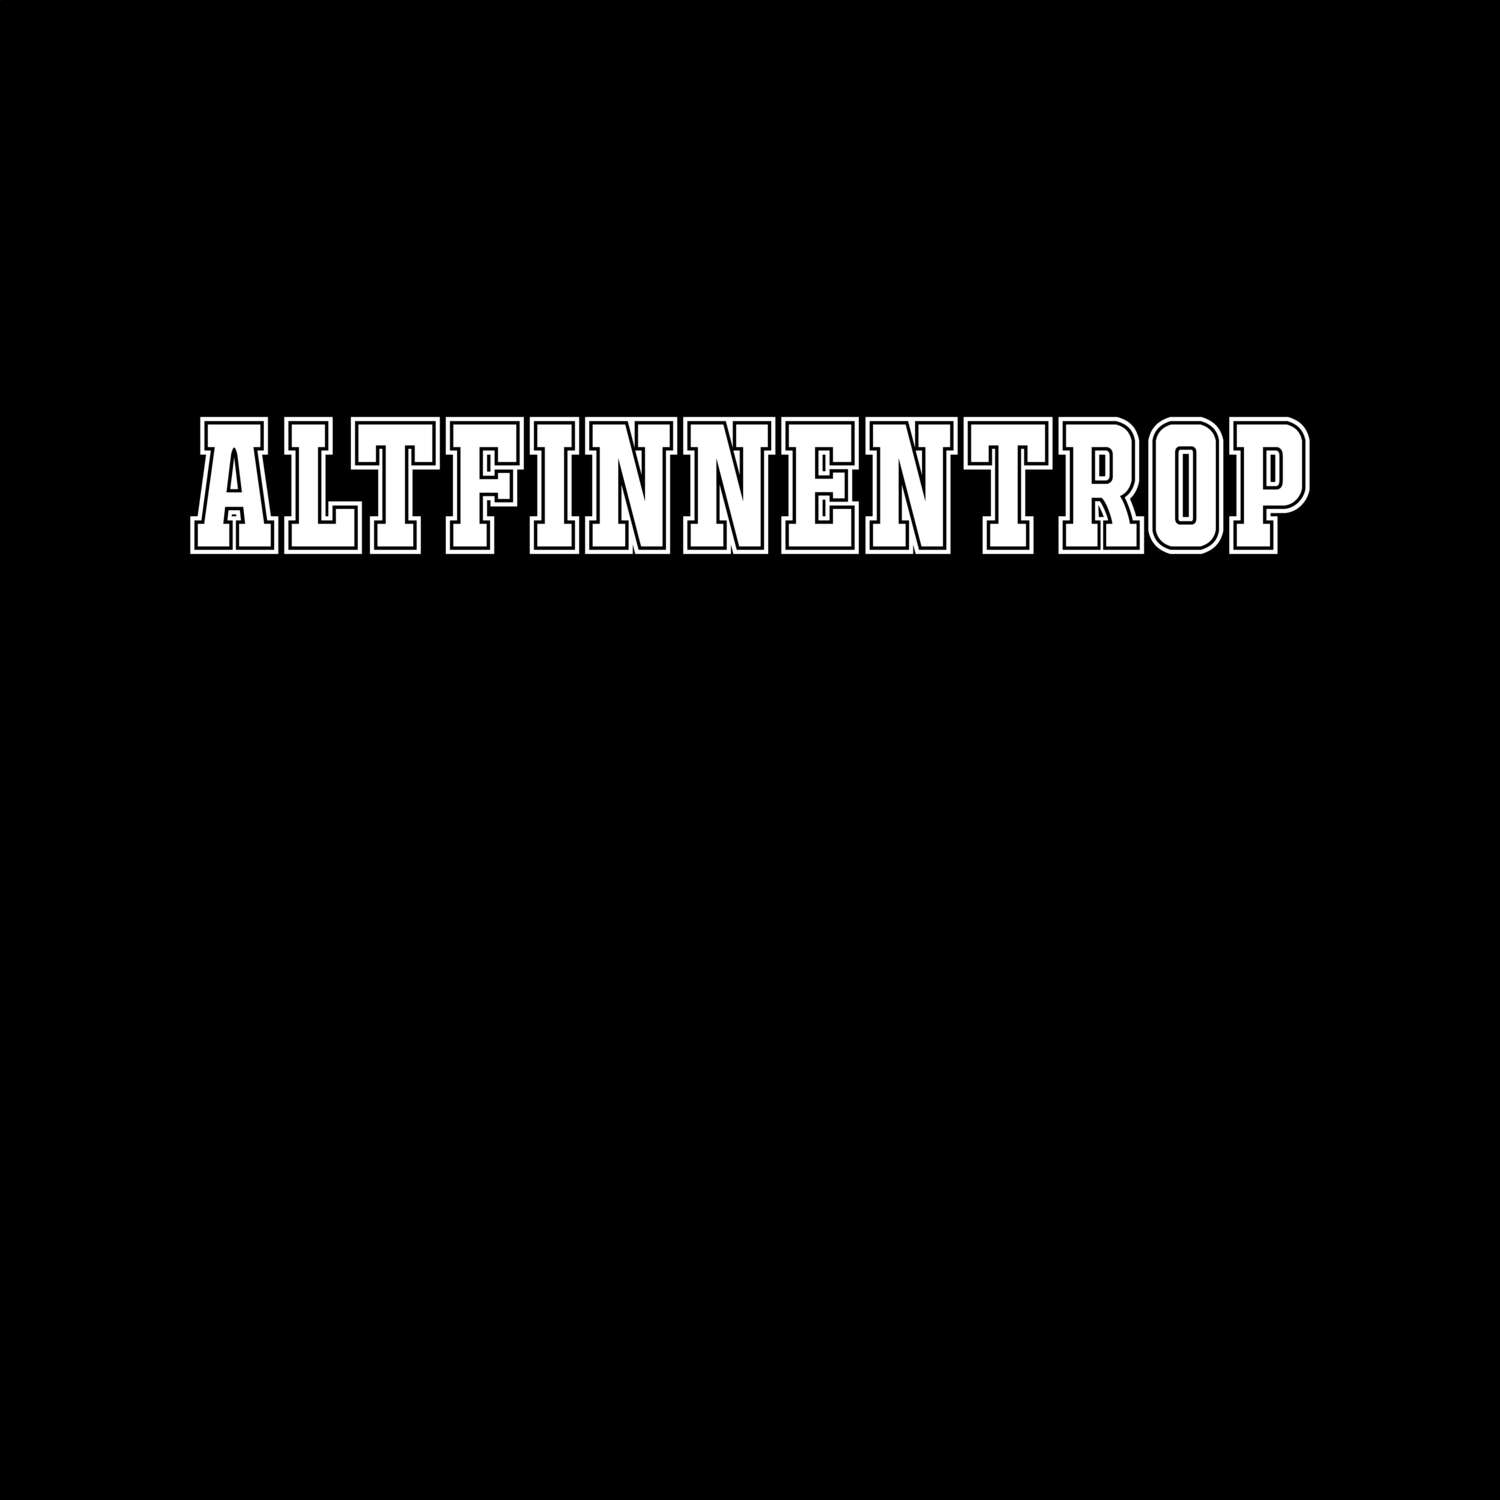 Altfinnentrop T-Shirt »Classic«